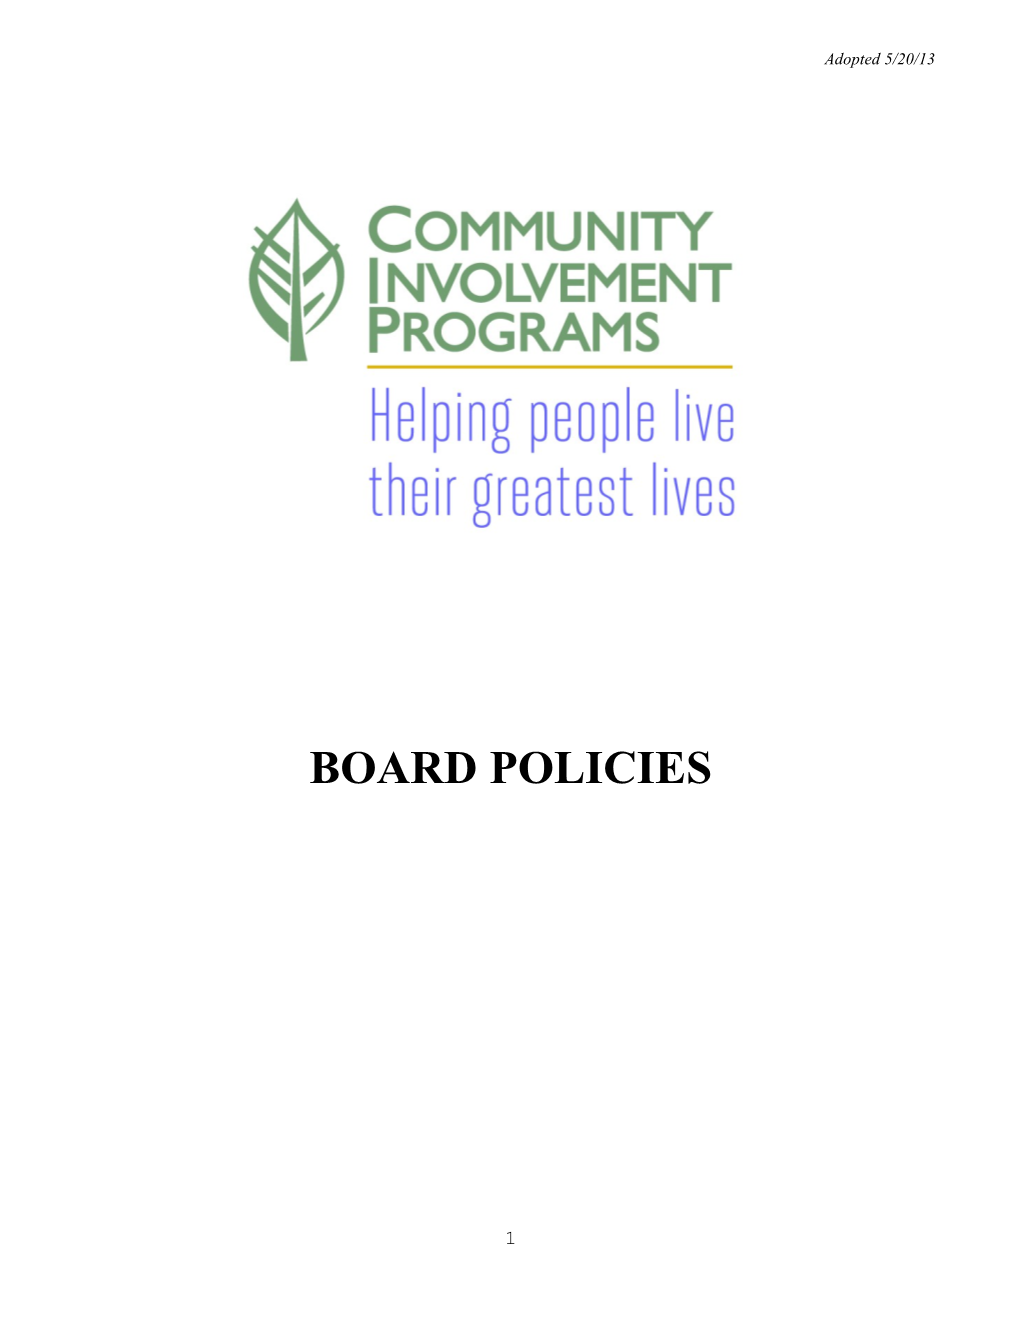 Board Policies